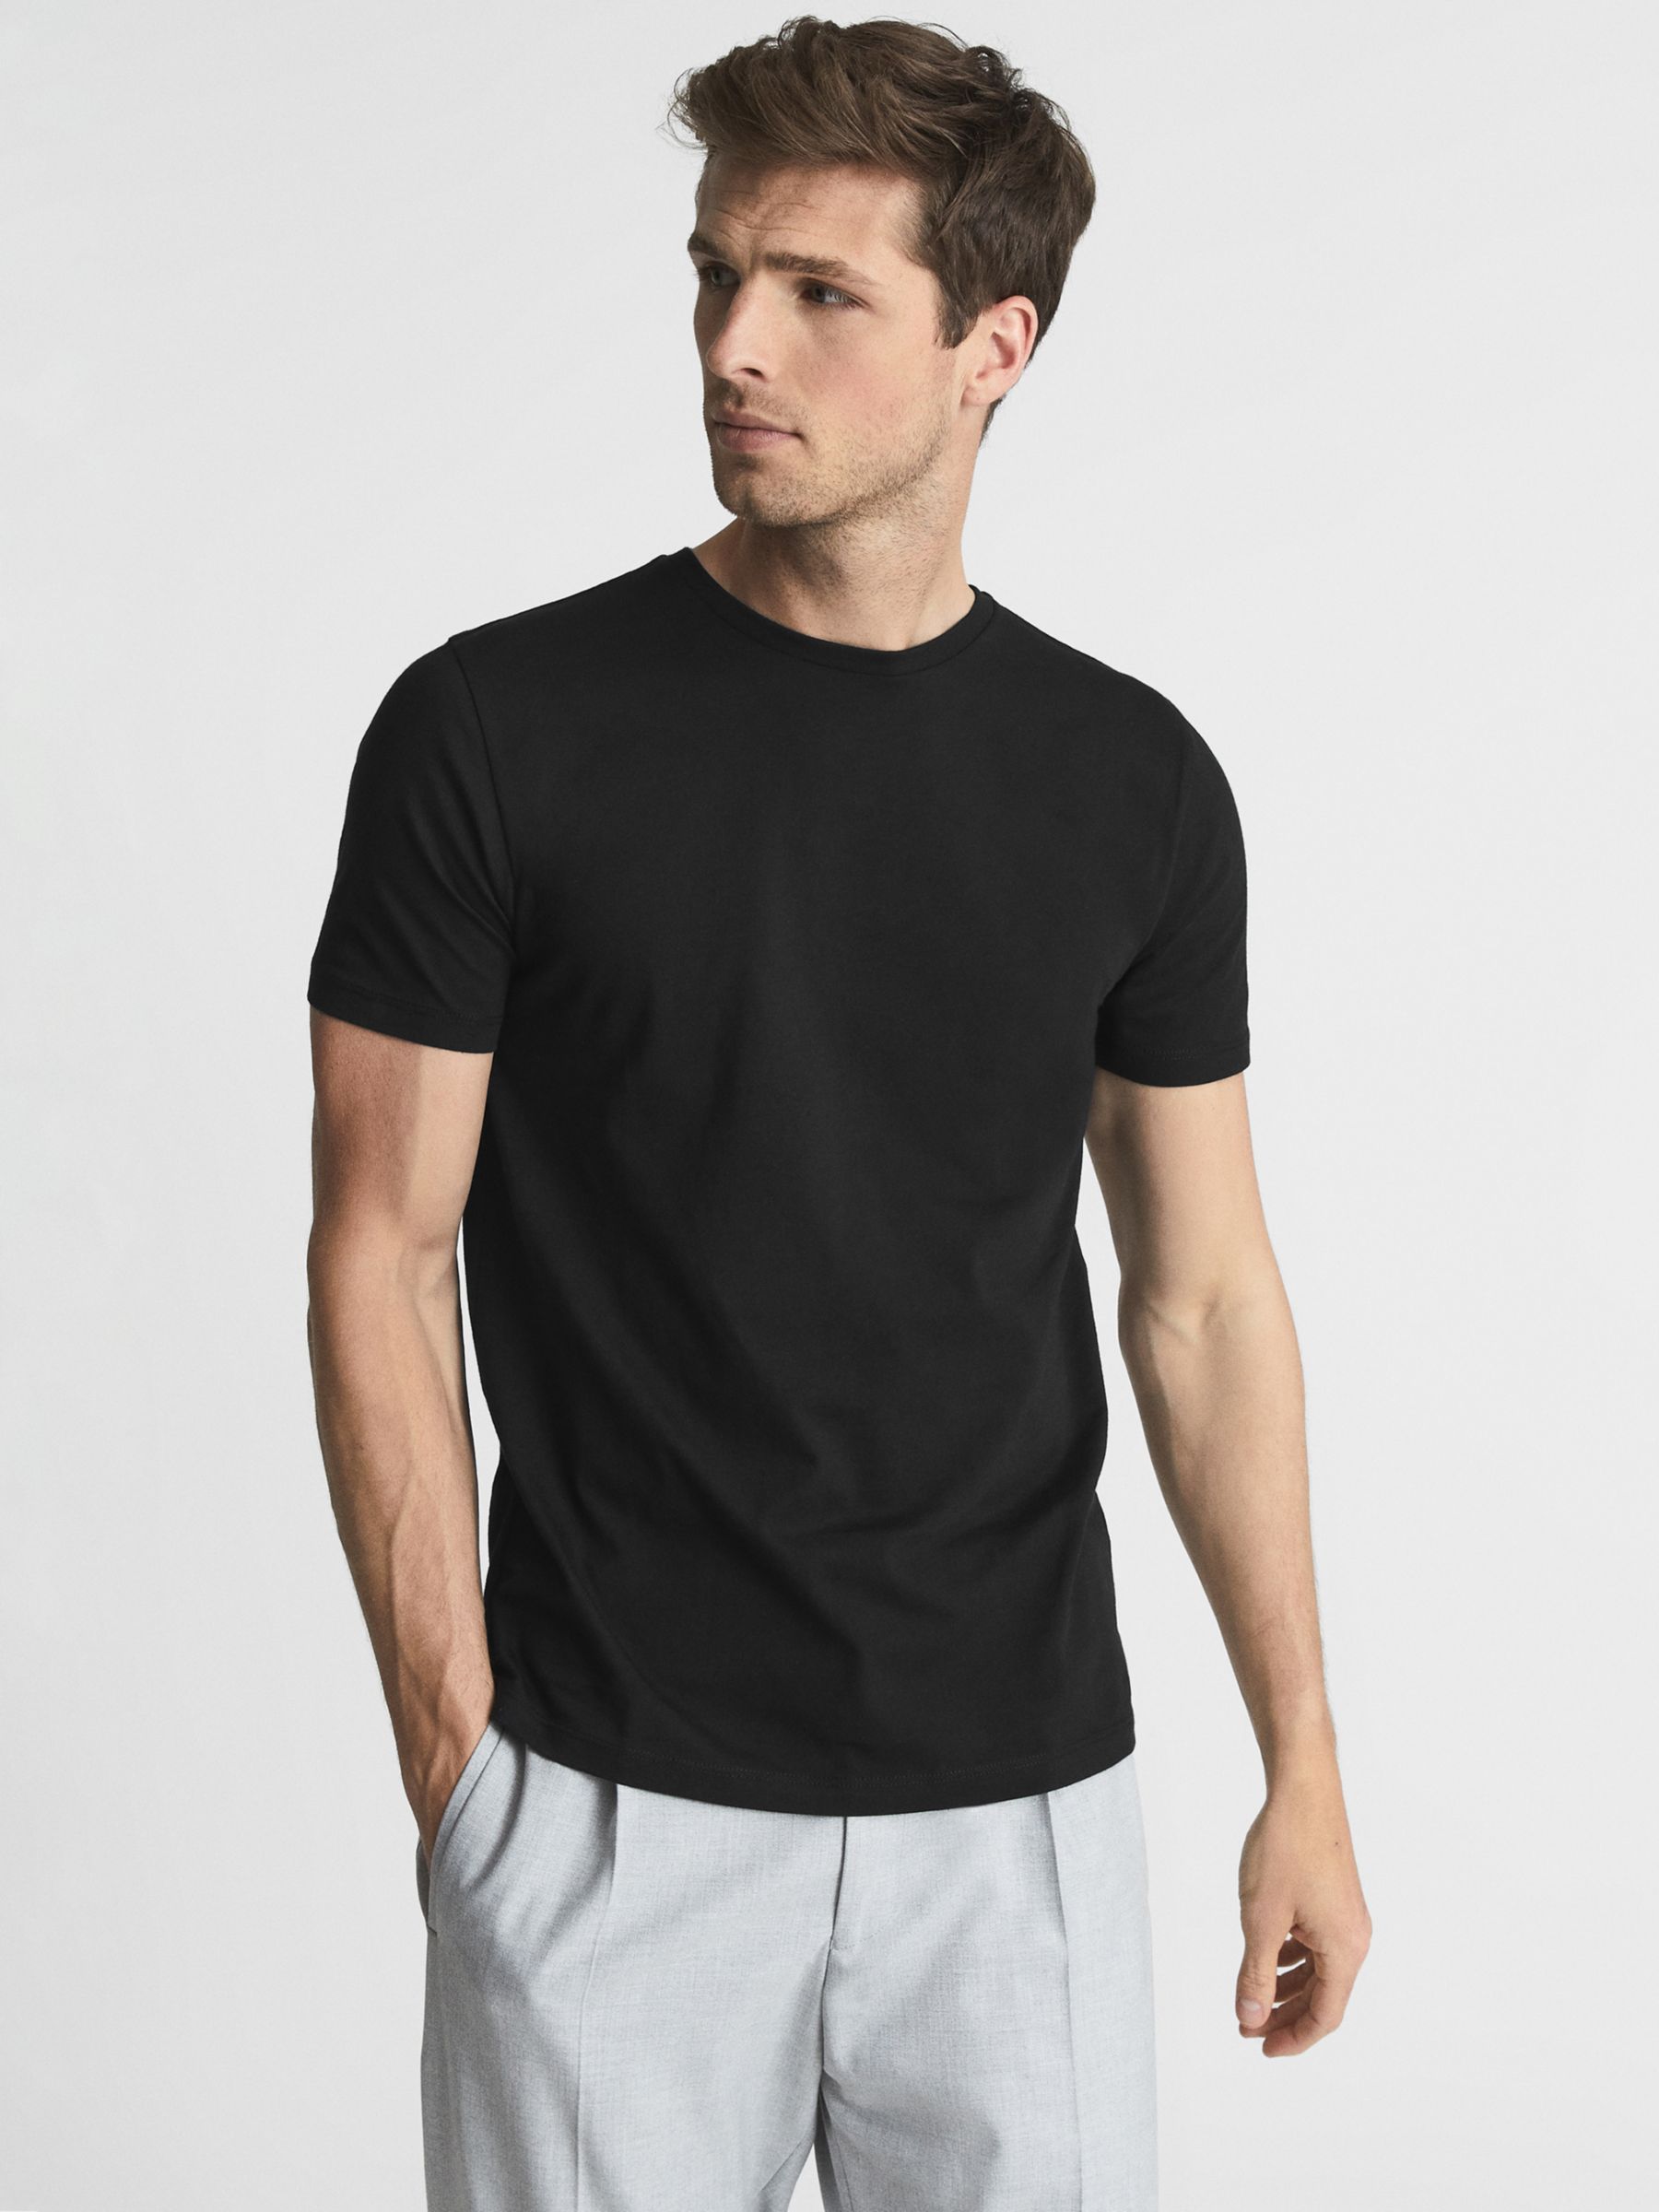 Reiss Bless Crew Neck T-Shirt, Black at John Lewis & Partners